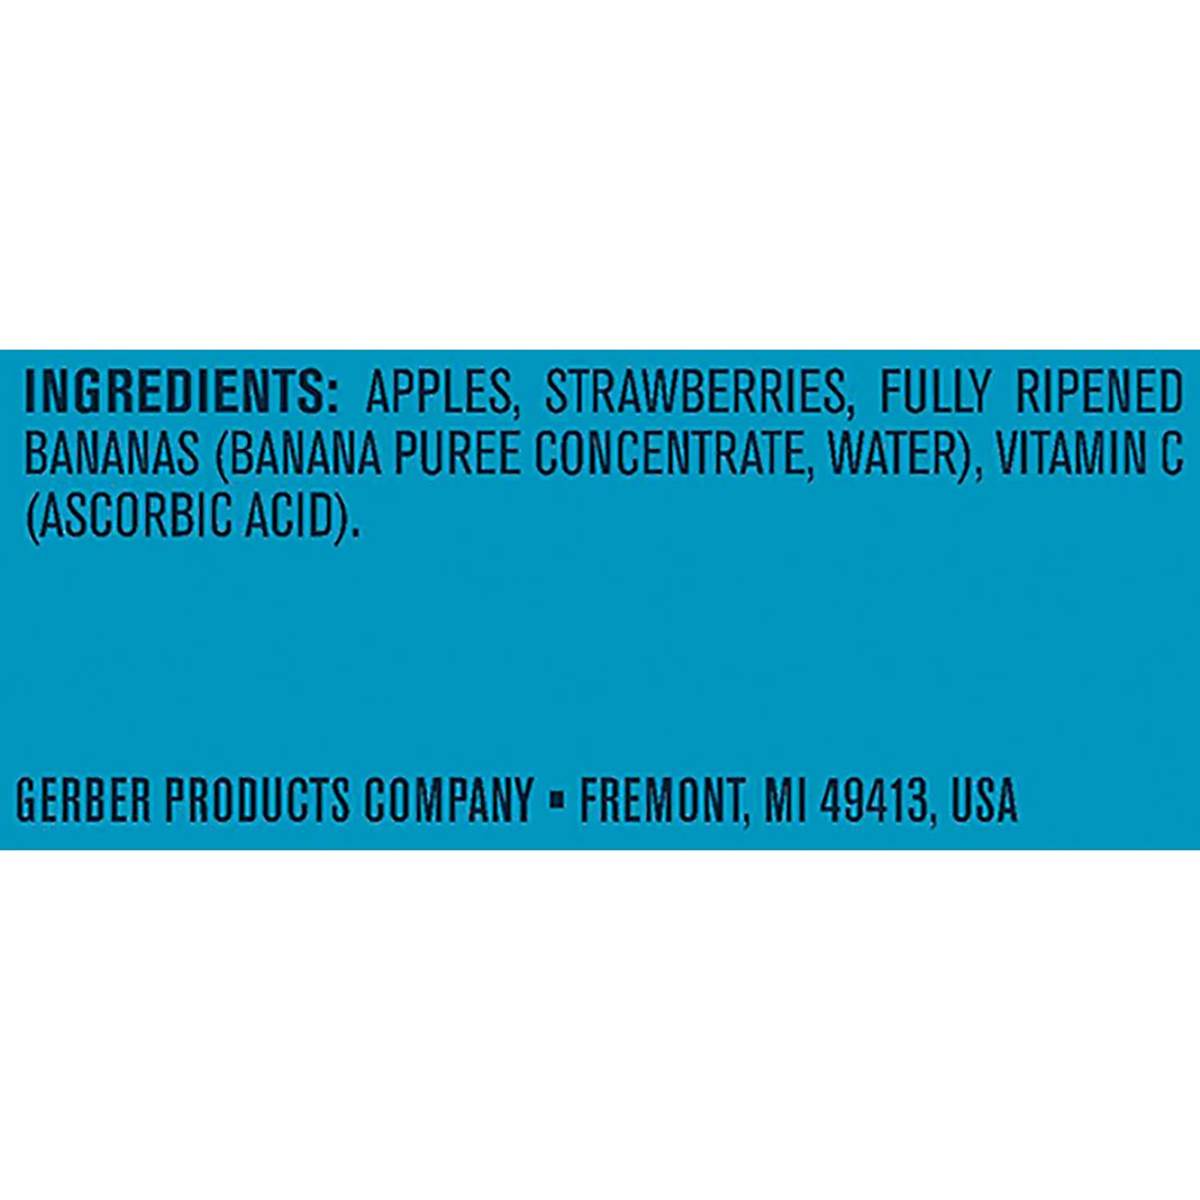 Gerber 2nd Foods for Sitter - Apple Strawberry Banana